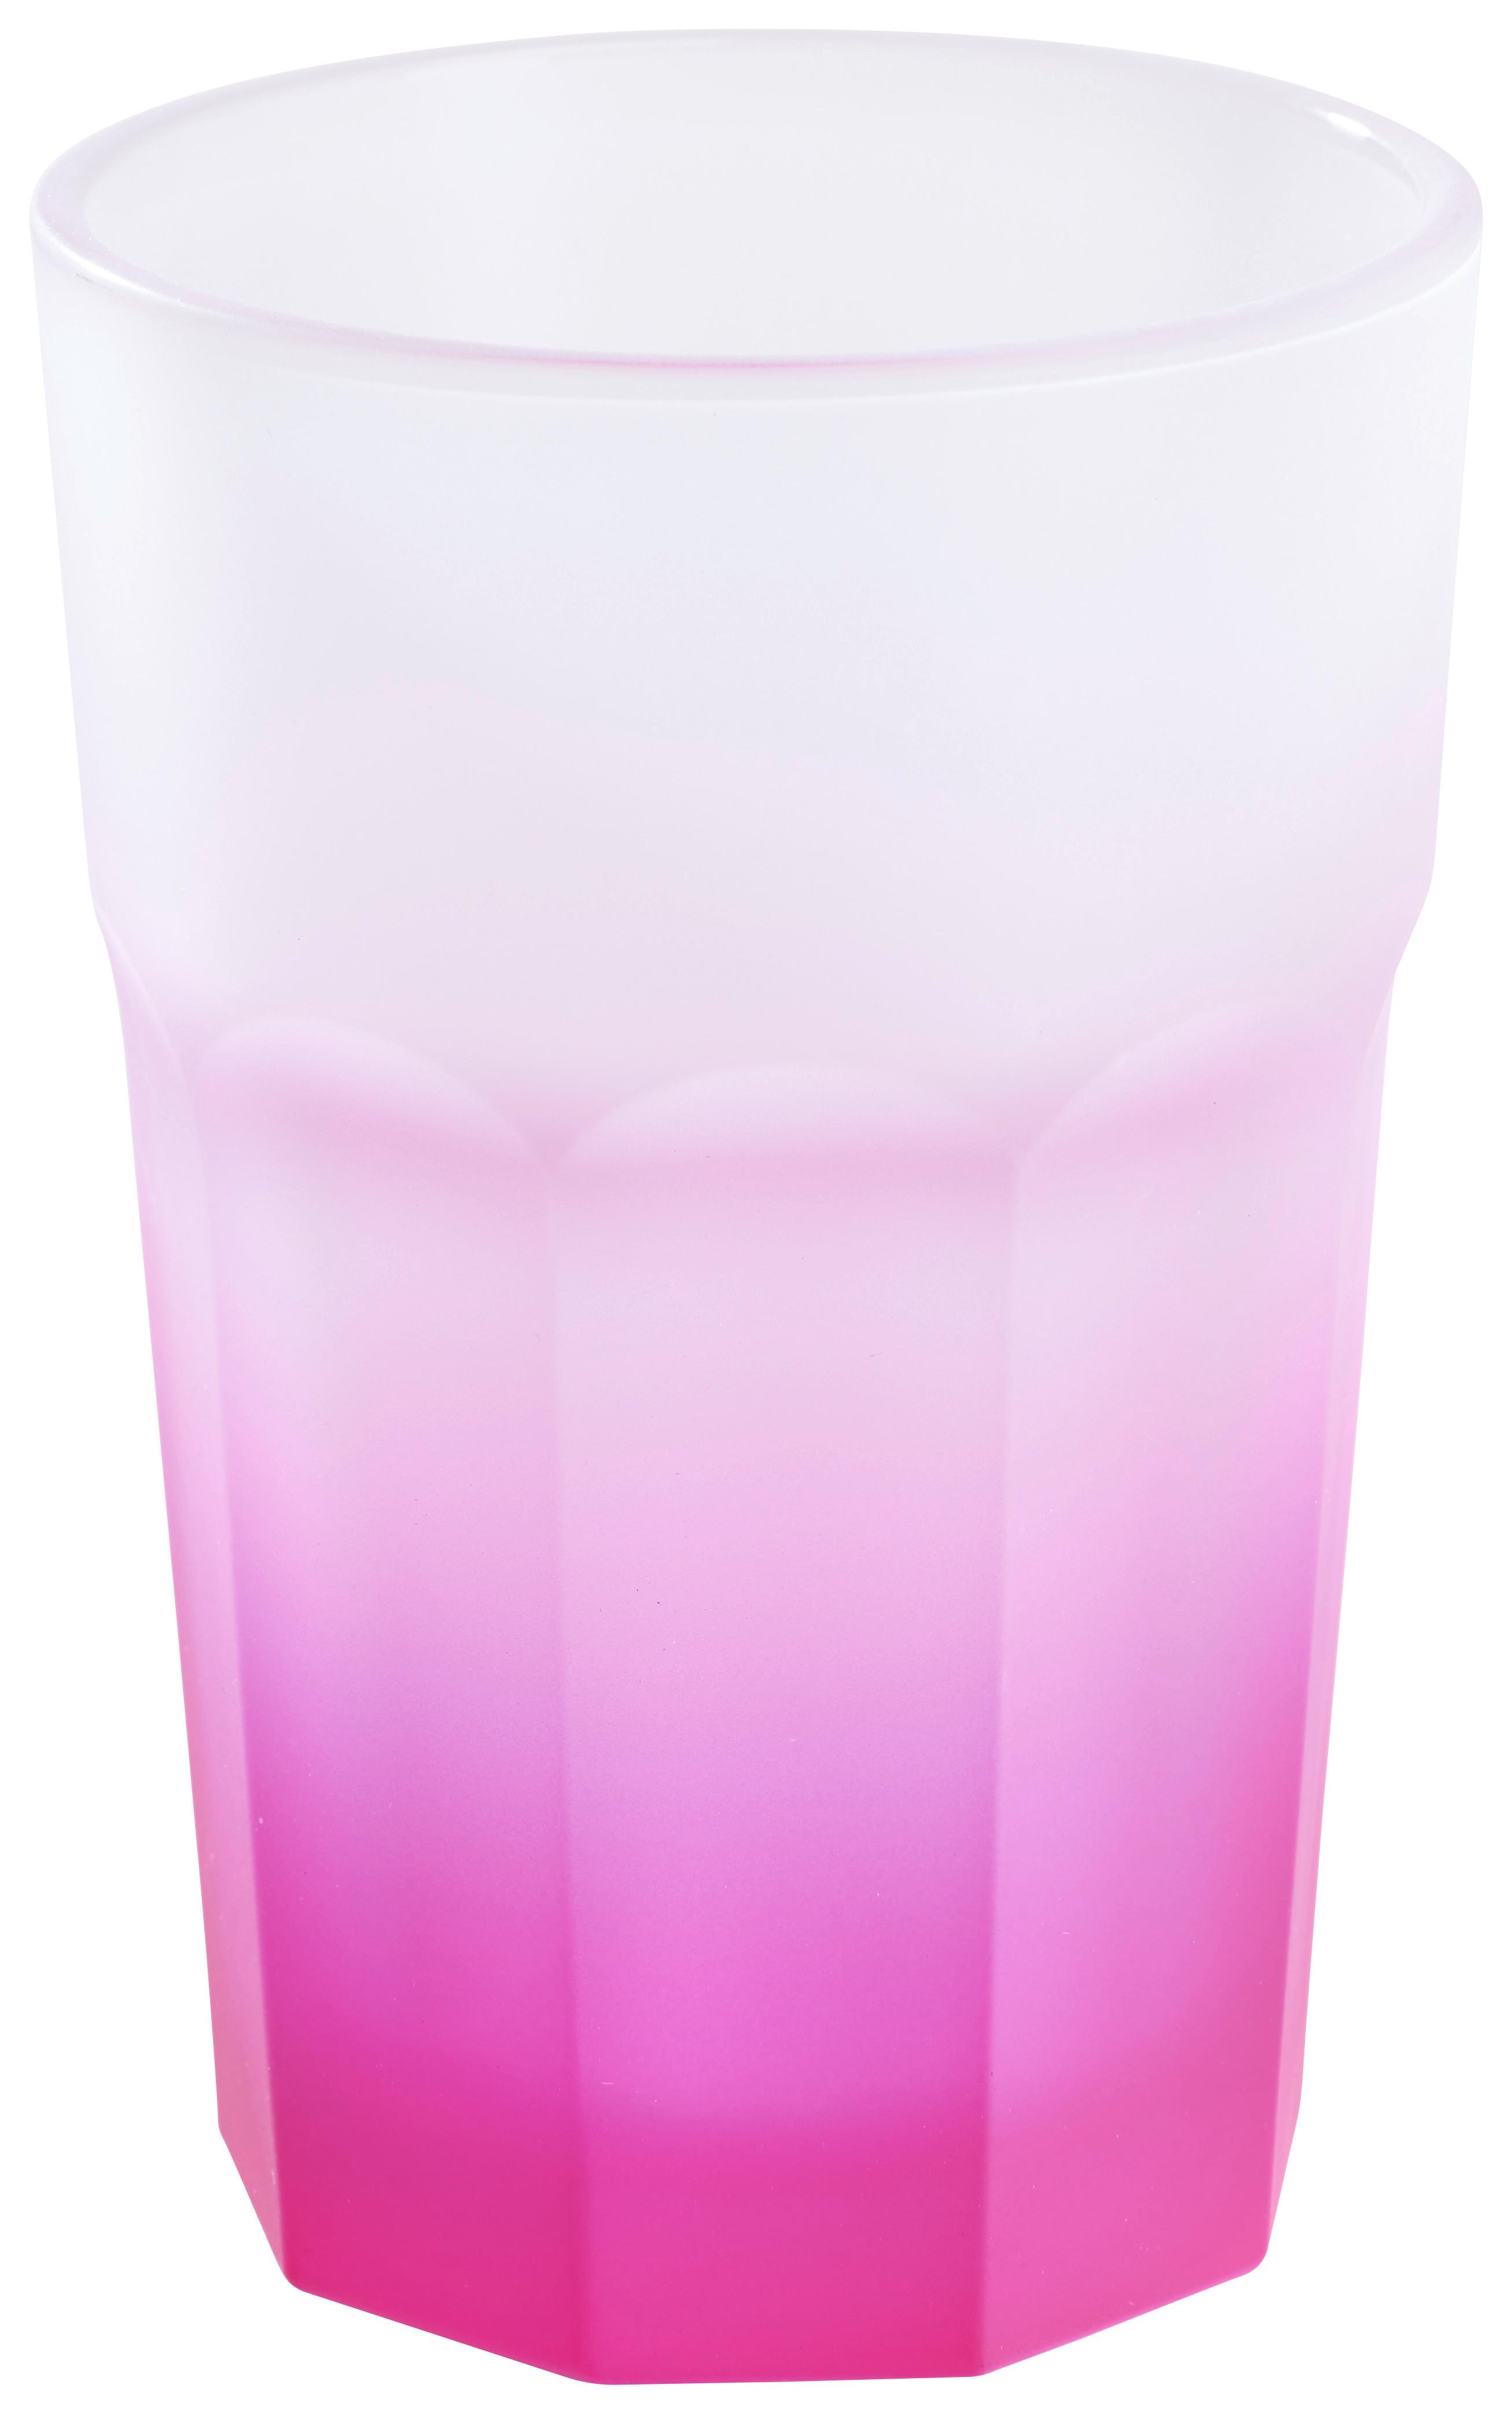 Trinkglas Sandy in diversen Farben - Klar/Pink, MODERN, Glas (8,5/12,1/8,5cm) - Modern Living